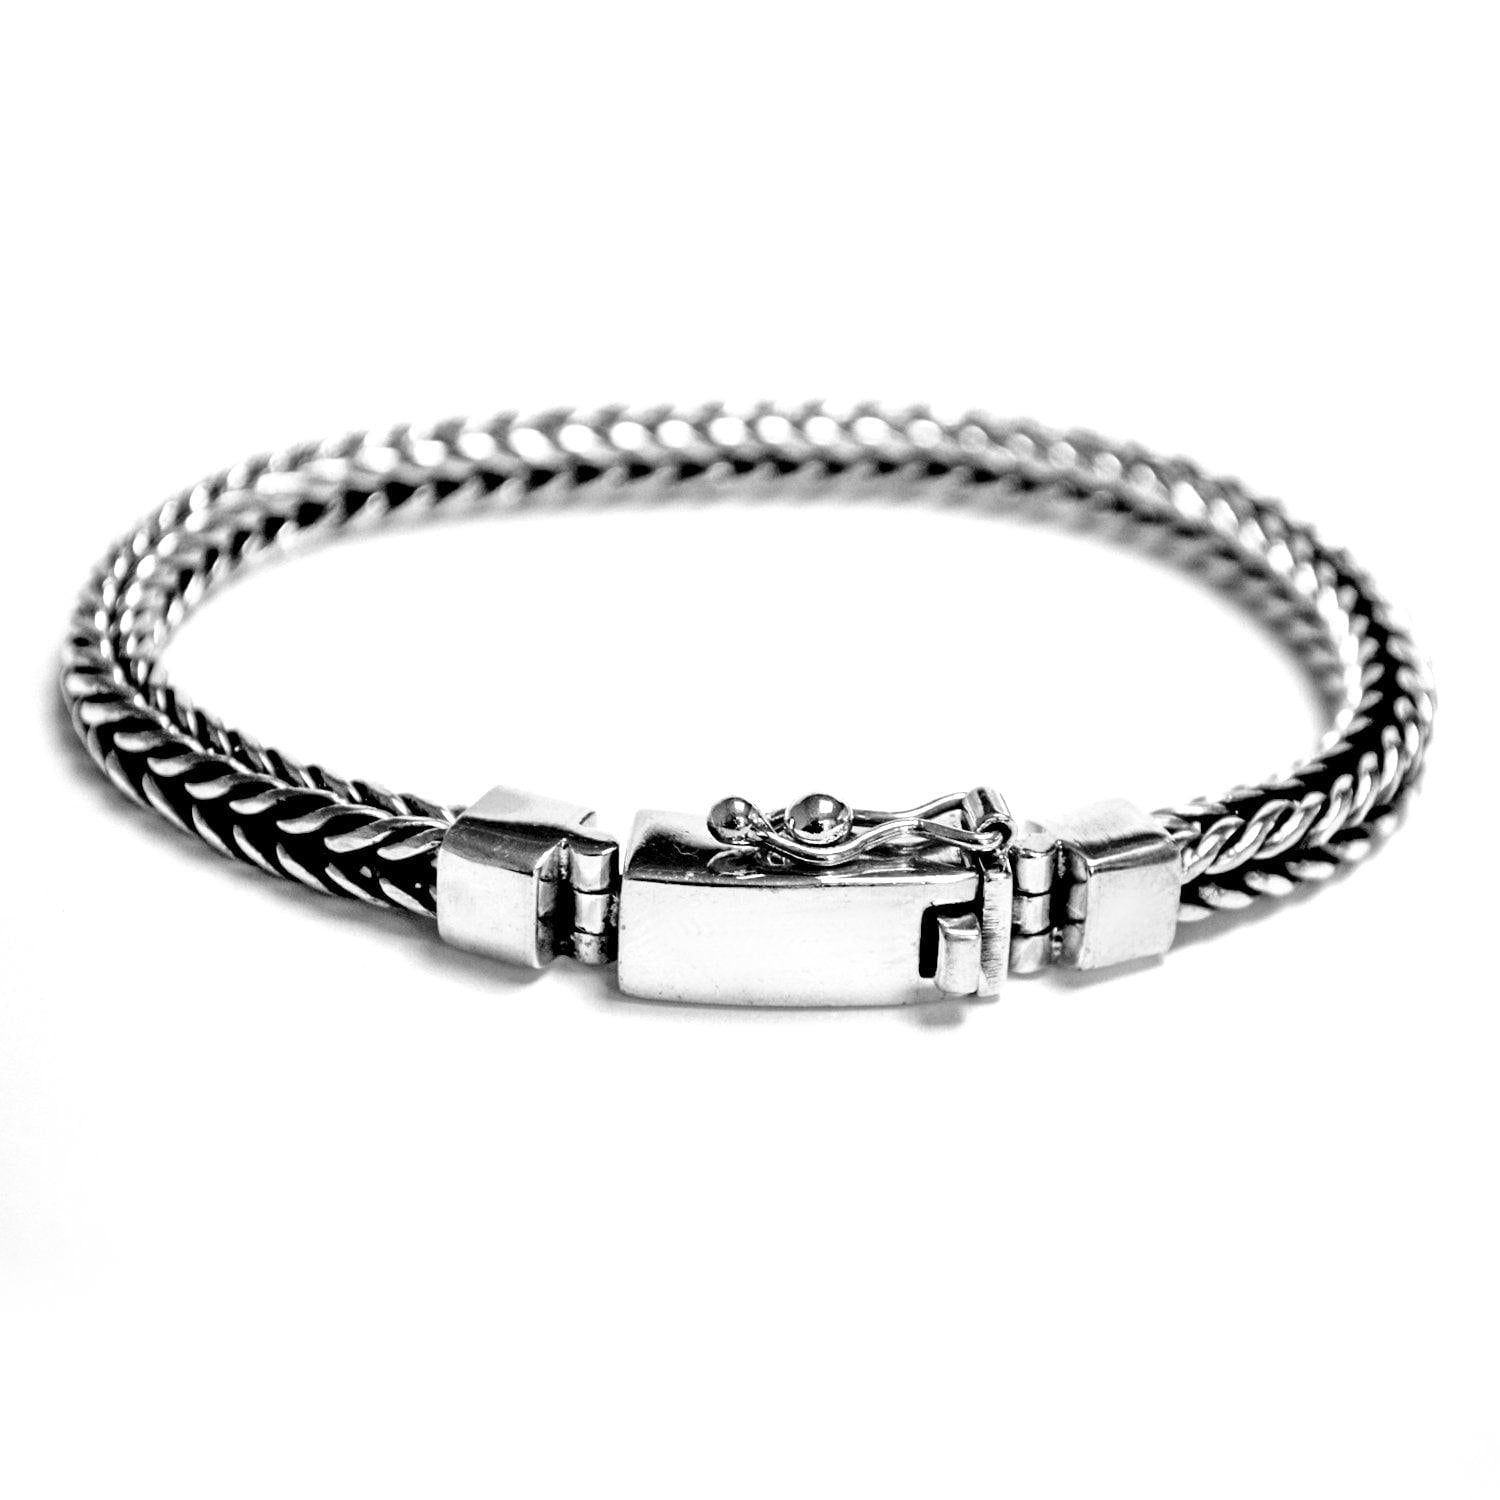 Solid 925 Sterling Silver Handmade Square WHEAT Chain Bracelet 5 mm Handmade - Inspiring Jewellery